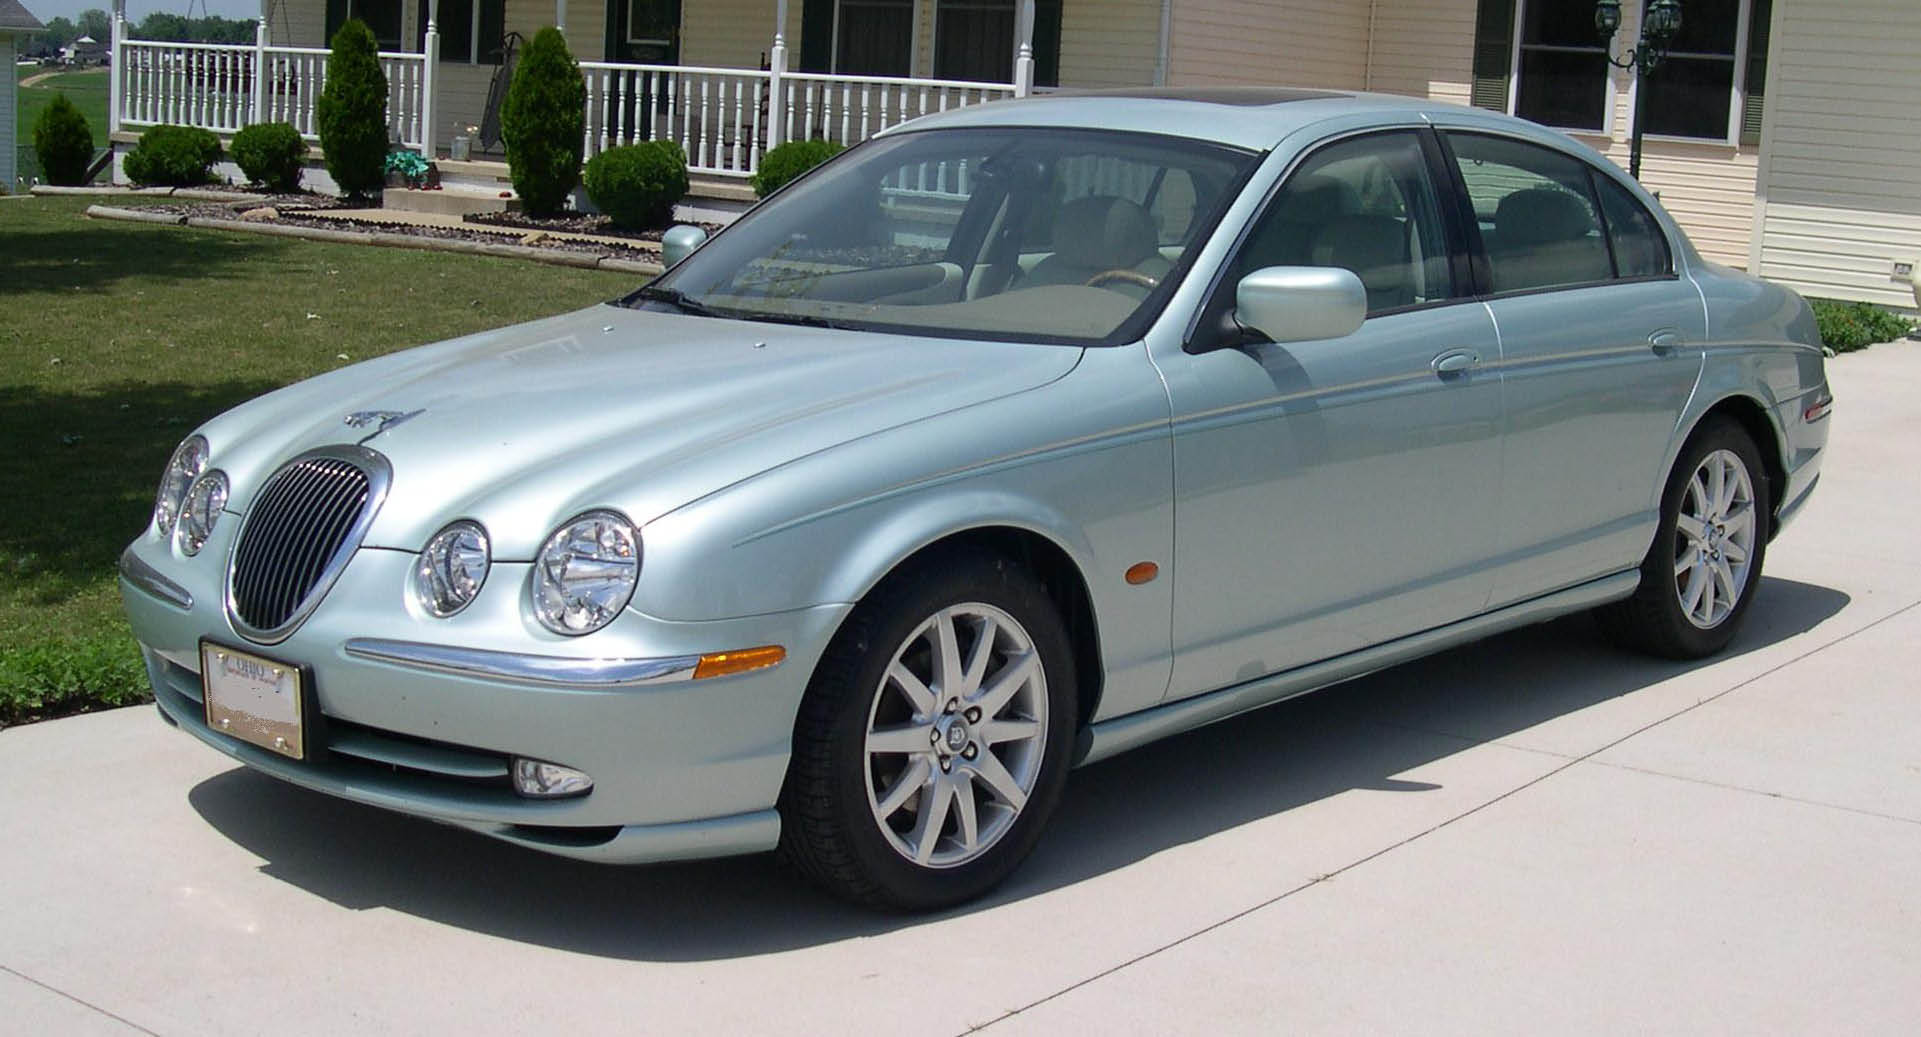 File:2001 Jaguar S-Type.JPG - Wikimedia Commons